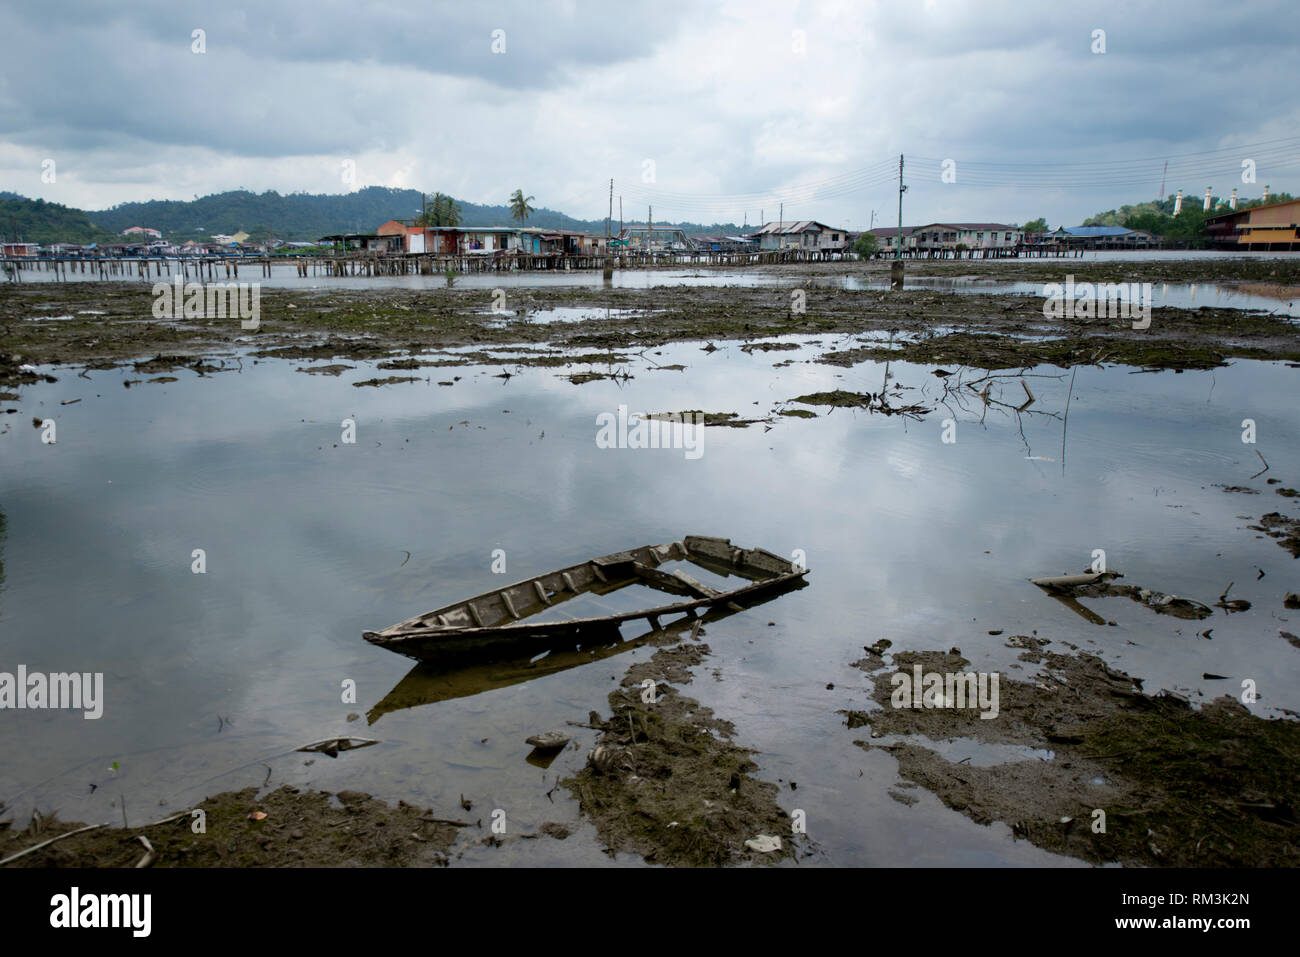 Kampong Ayer, Water Village with sunken boat in swamp by Kedayan River, Bandar Seri Begawan, Brunei Stock Photo